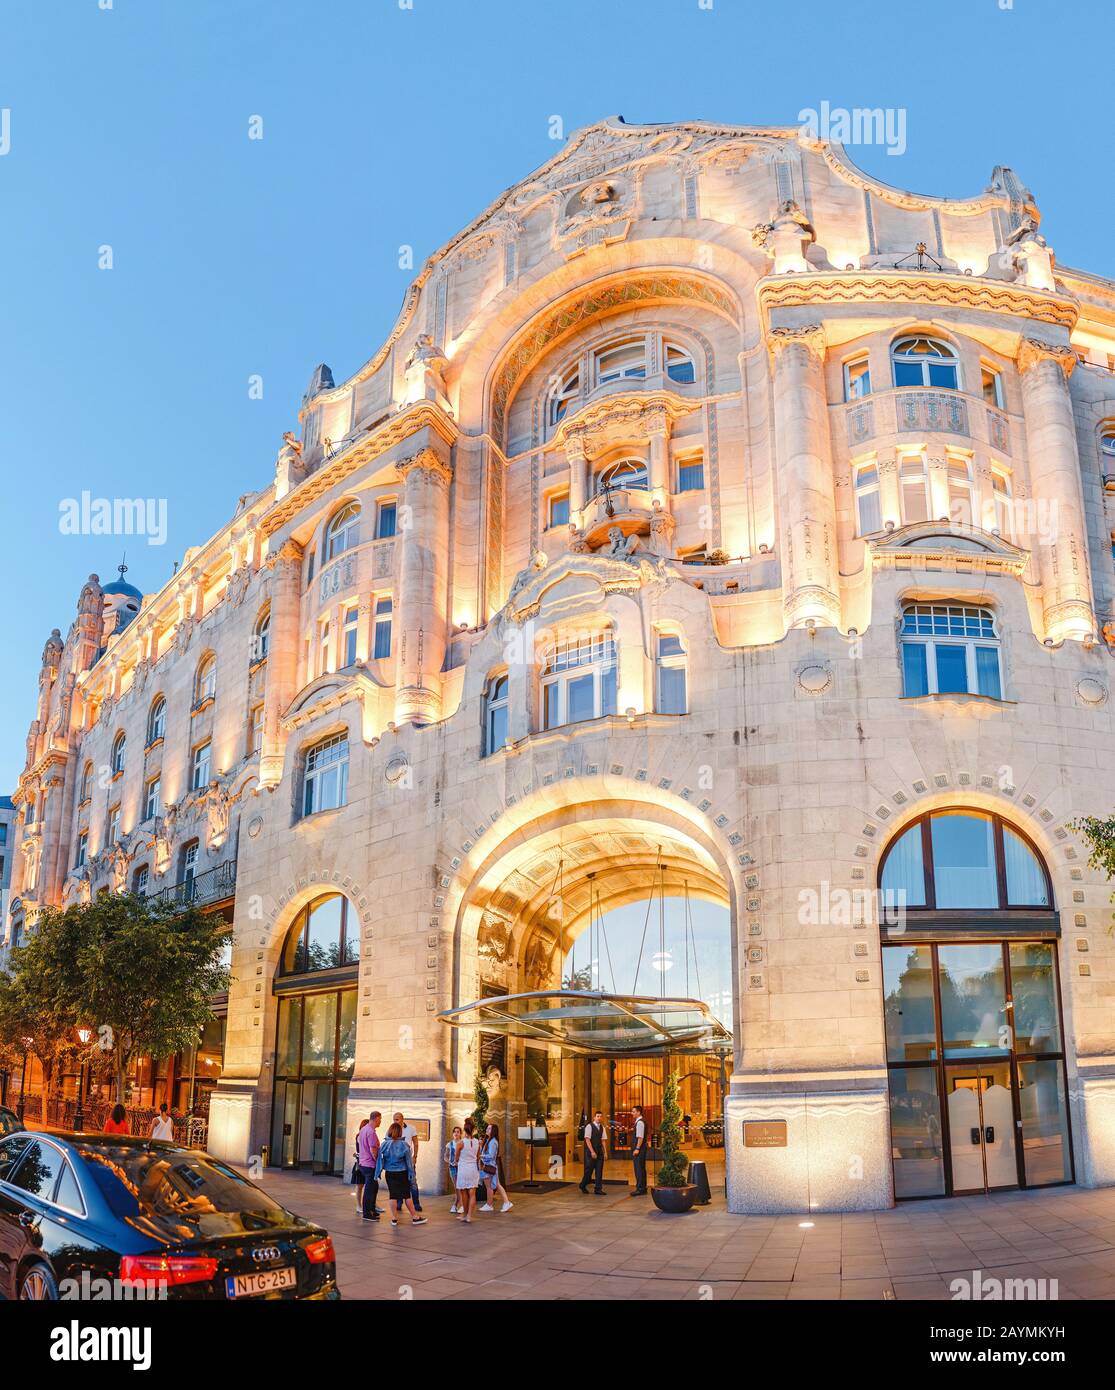 13 MAY 2018, BUDAPEST, HUNGARY: The Gresham Palace and four season hotel at evening Stock Photo